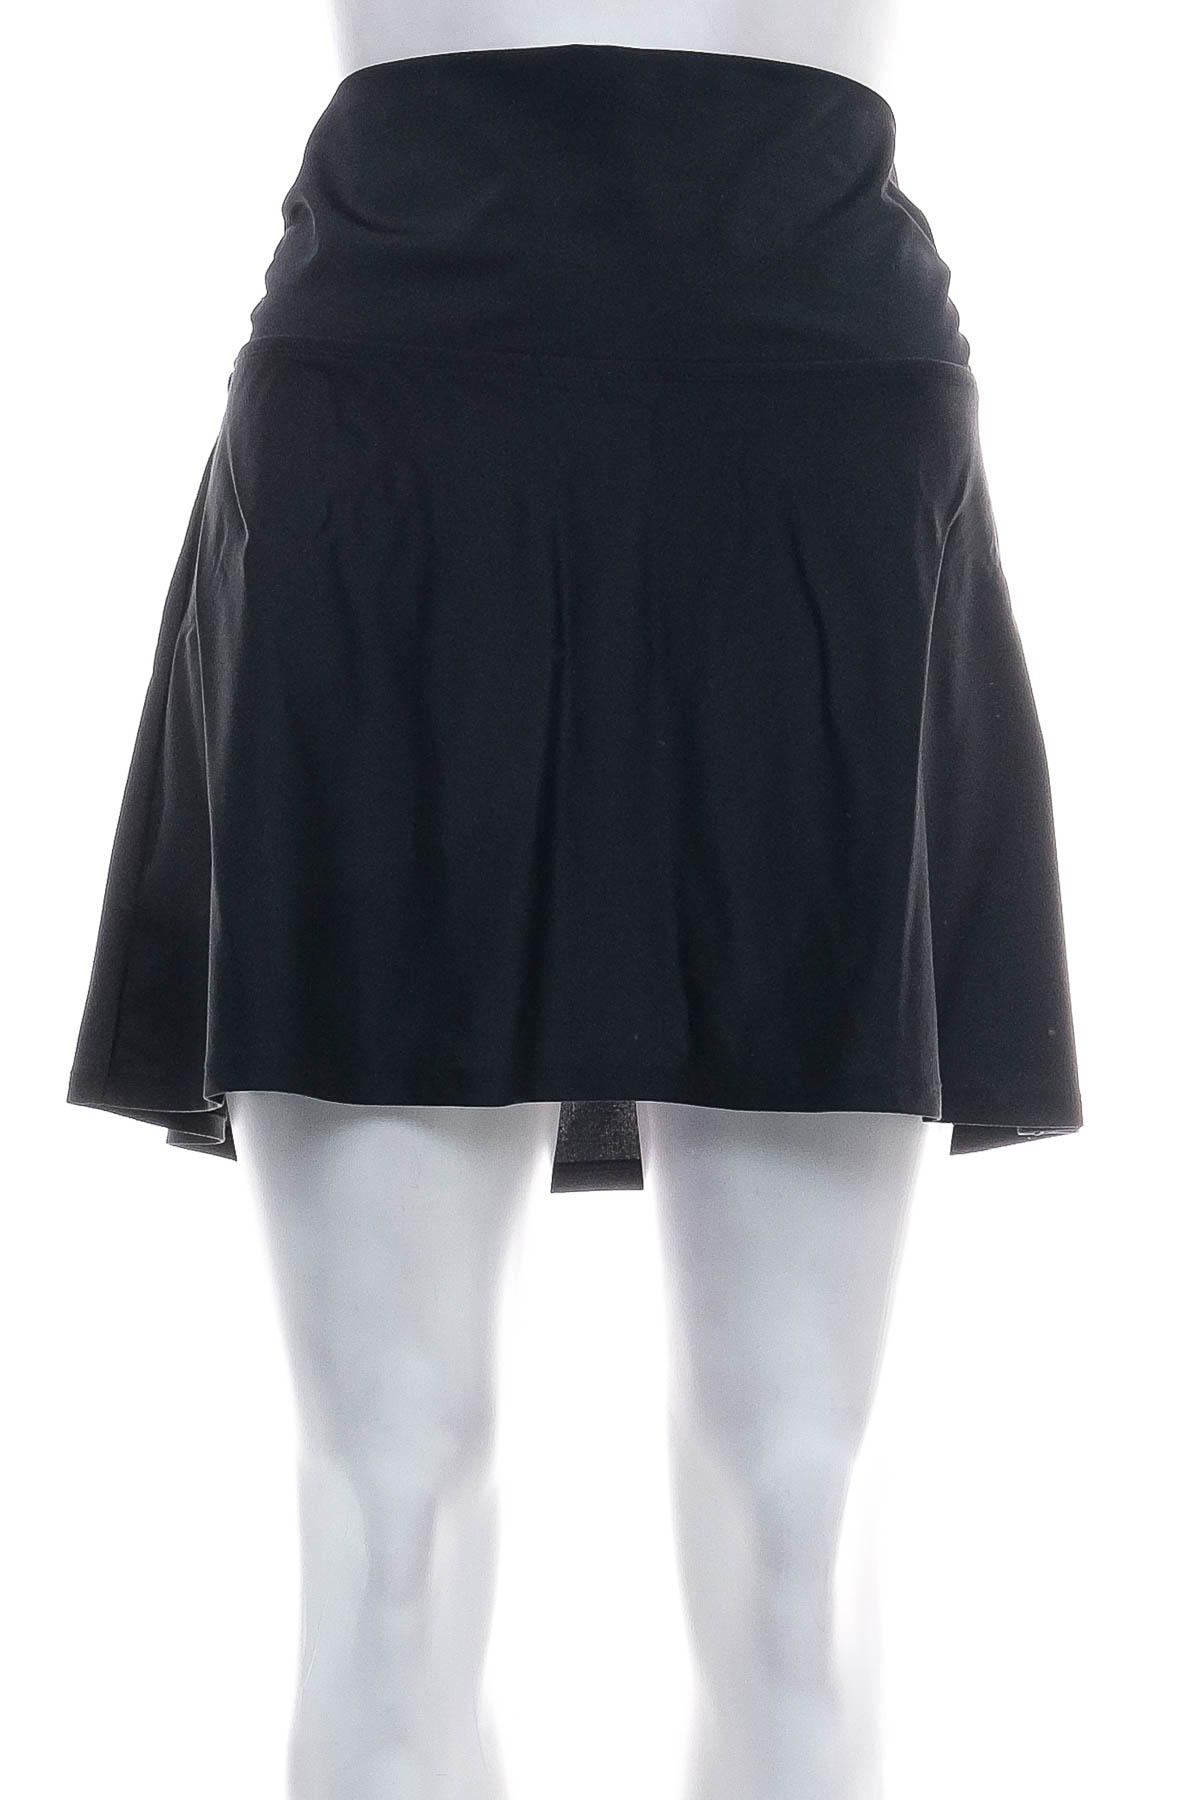 Spodnie spódnicowe - Bpc selection bonprix collection - 0